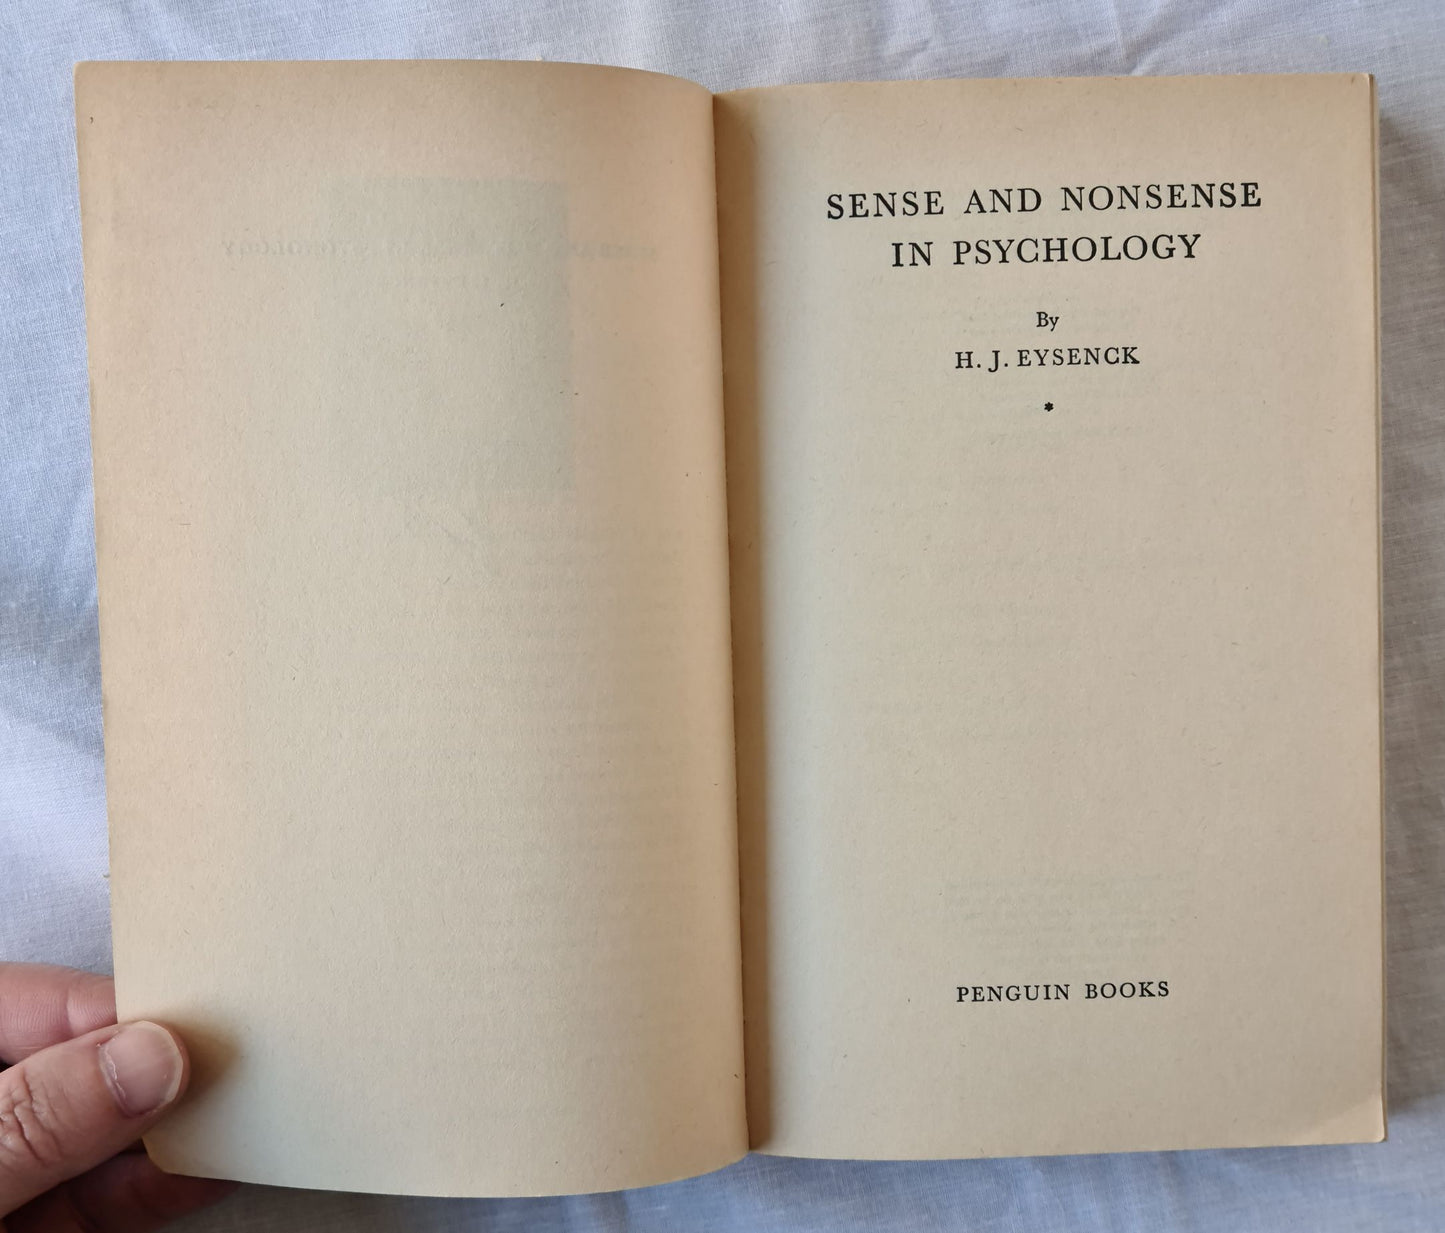 Sense and Nonsense in Psychology by H. J. Eysenck